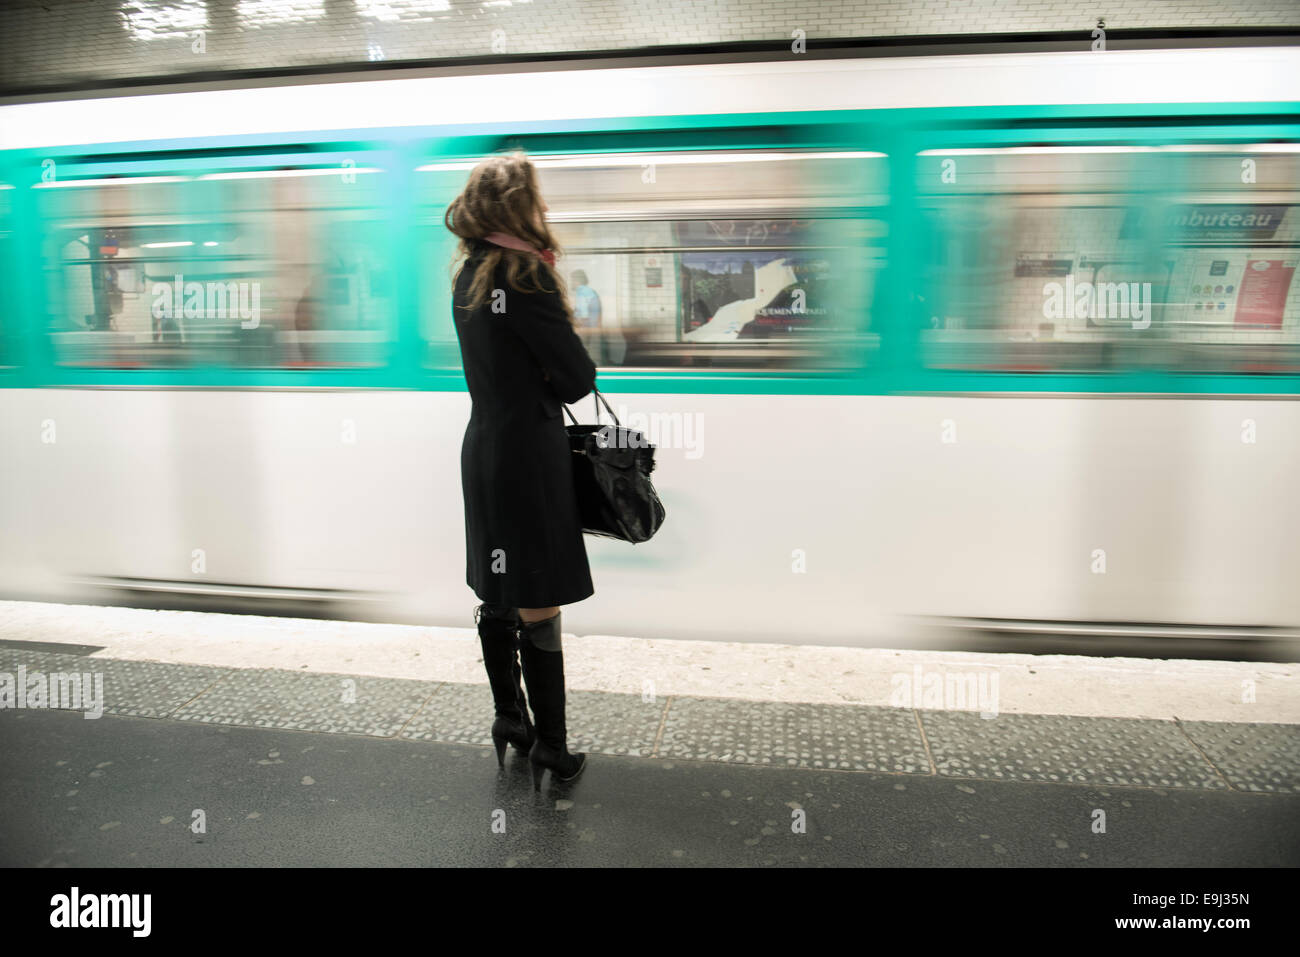 images of the paris metro underground train transport system Stock Photo